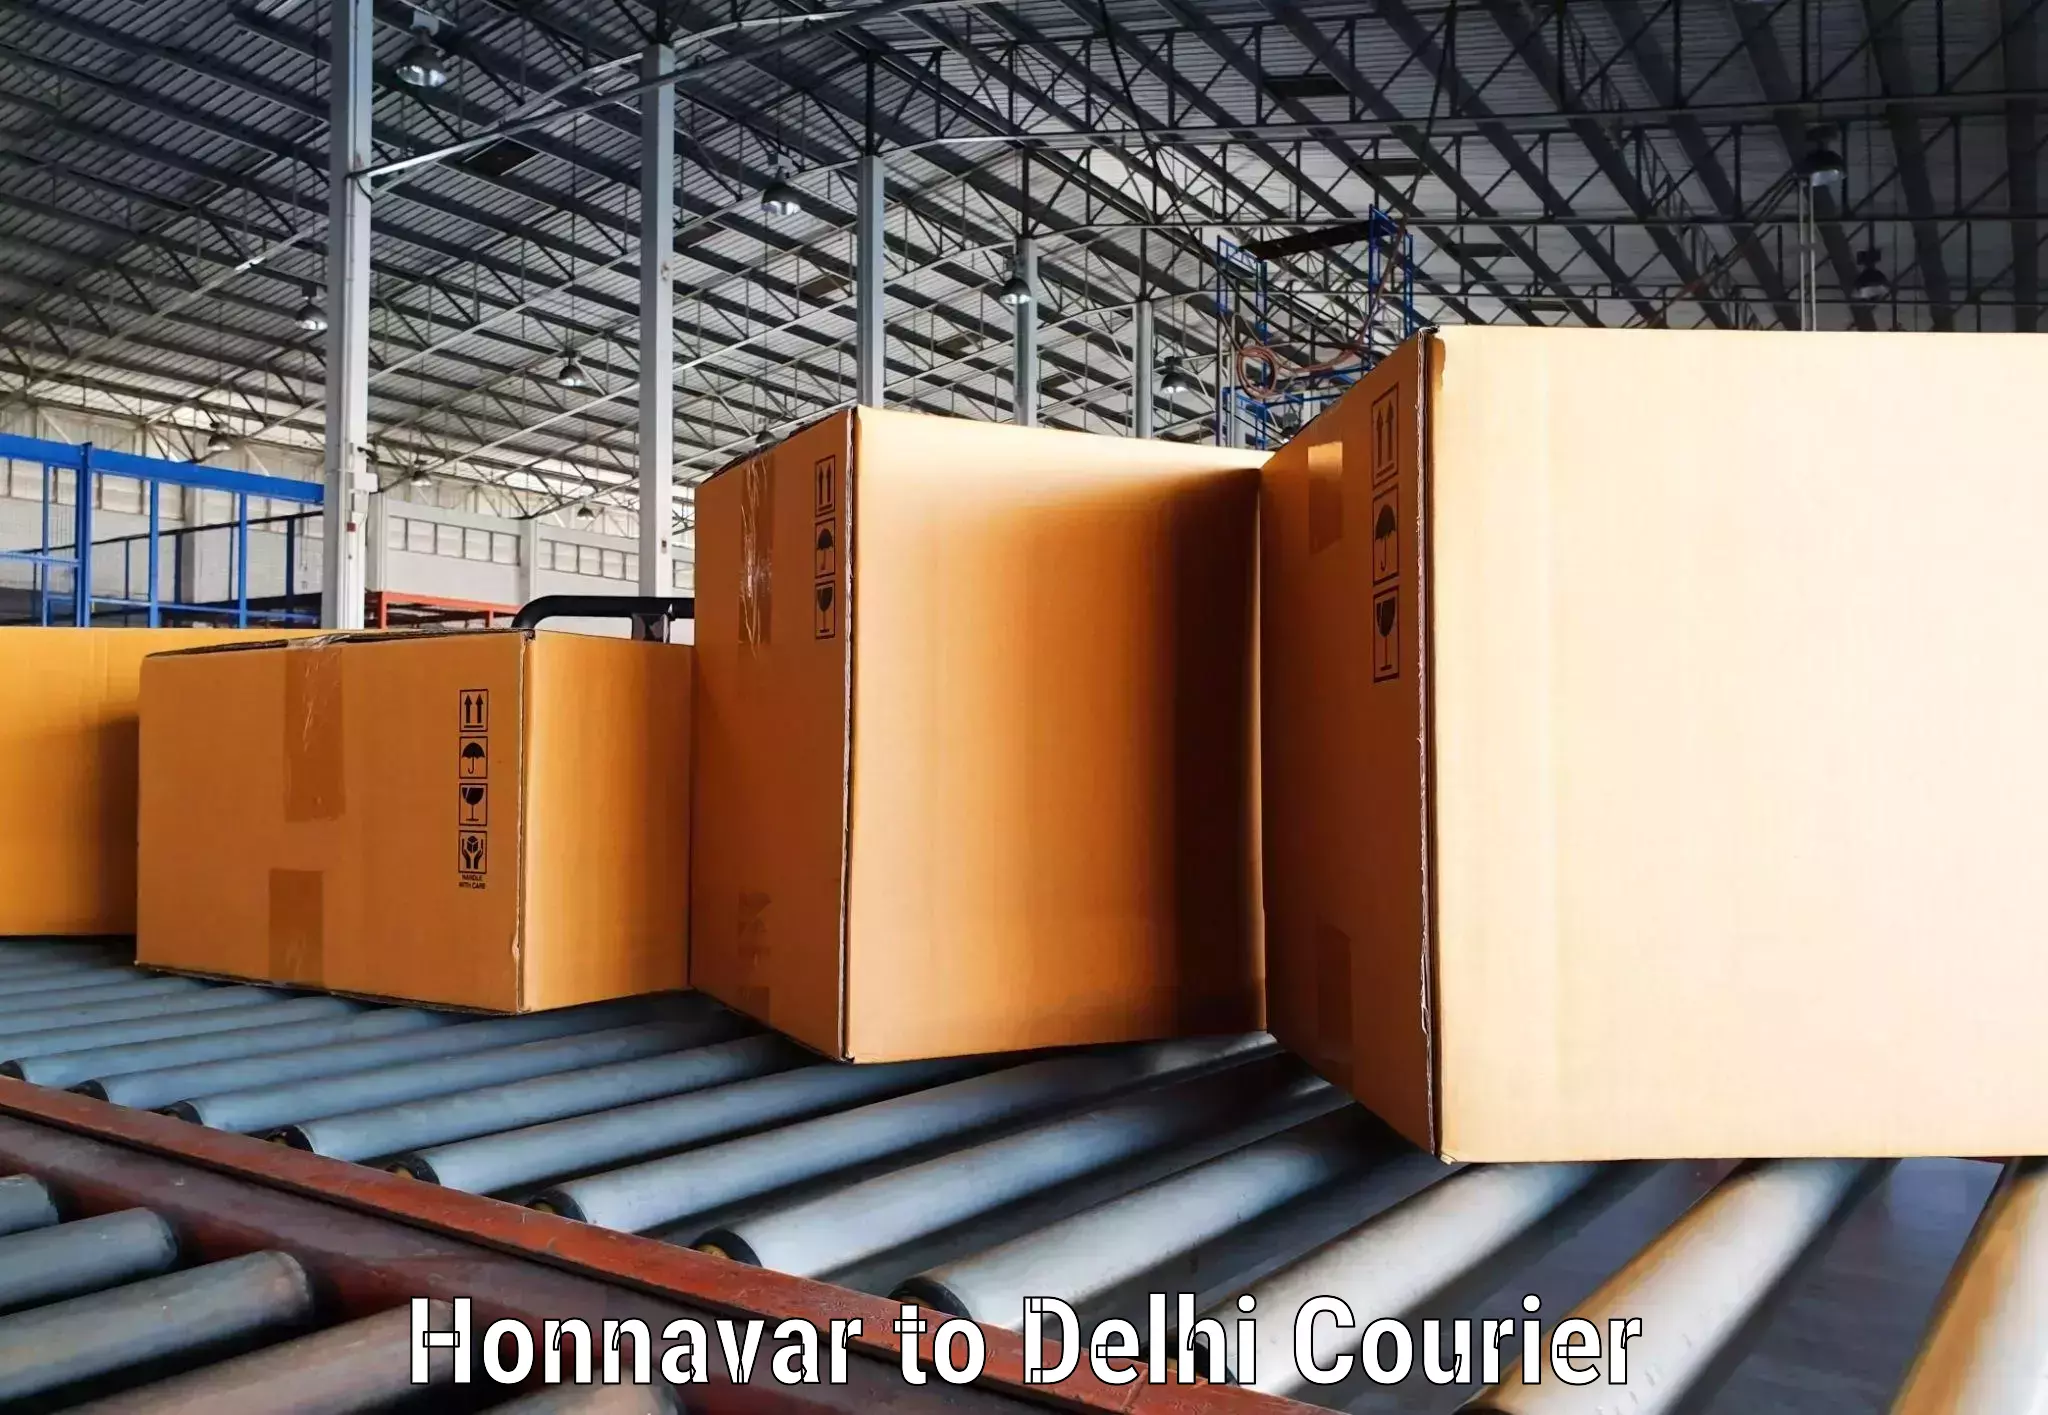 Express delivery capabilities Honnavar to Burari